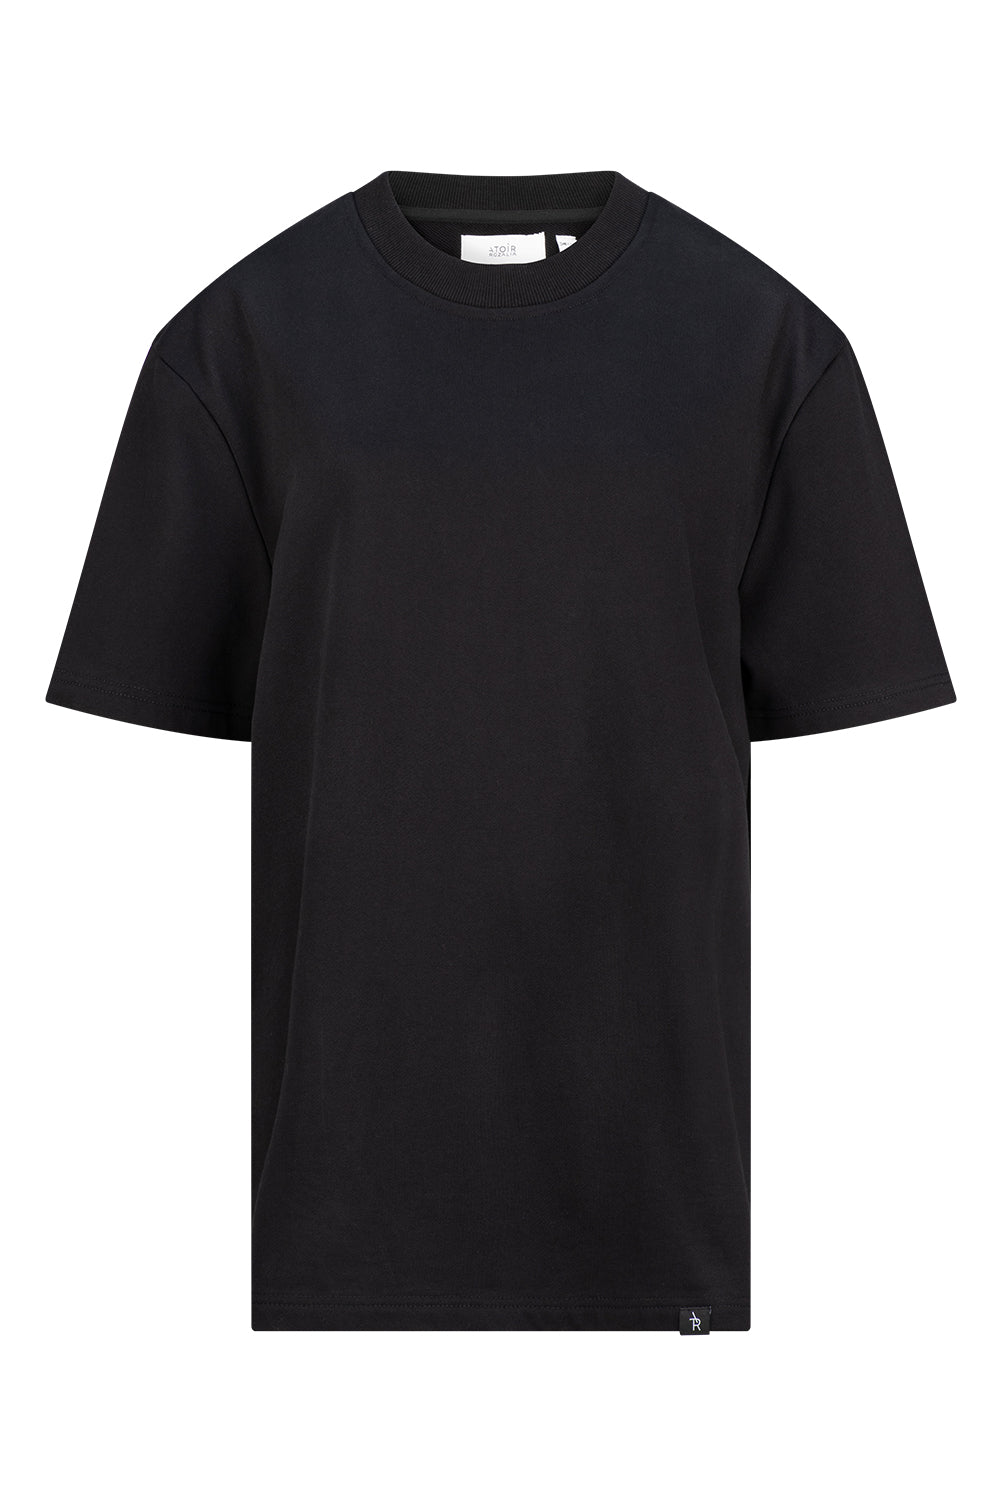 Atoir X Rozalia The T-Shirt Black